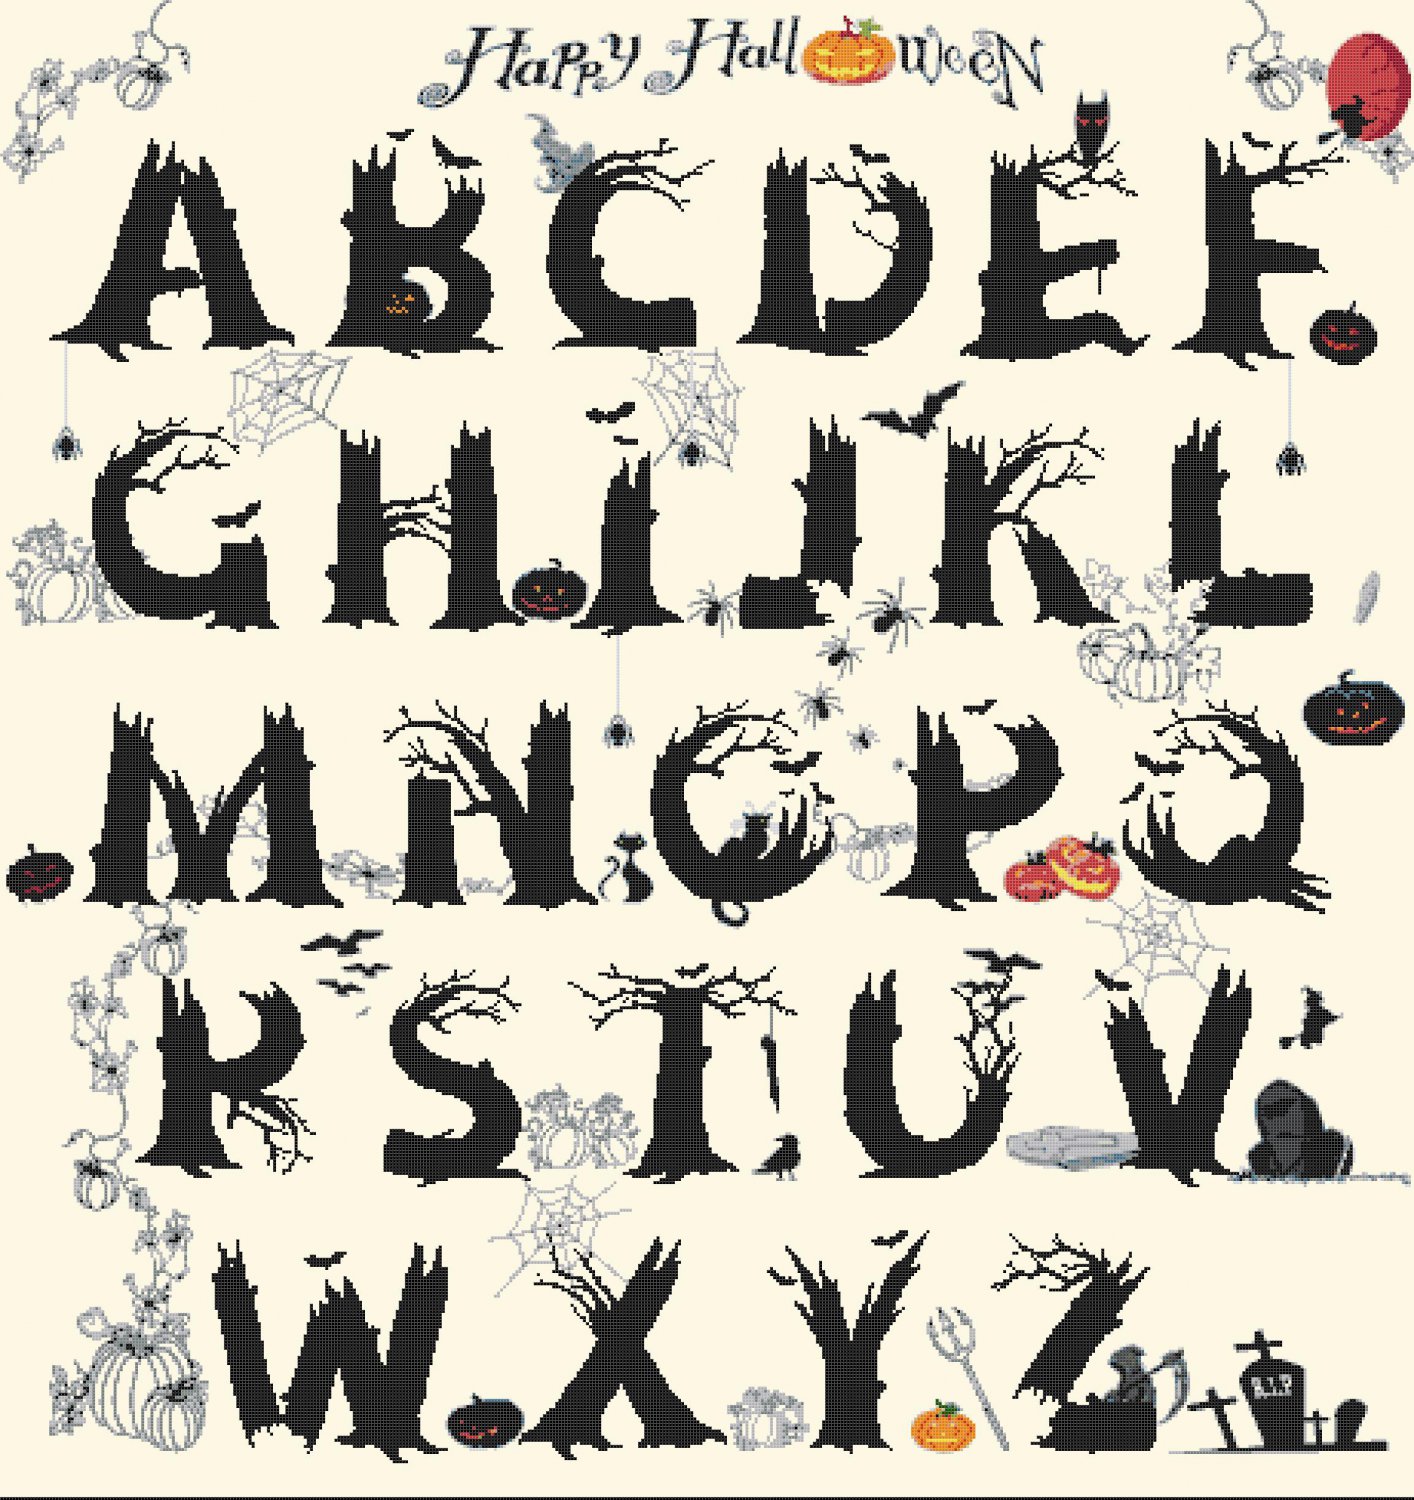 counted cross stitch pattern happy halloween ABC alphabet 461*489 stitches E1232